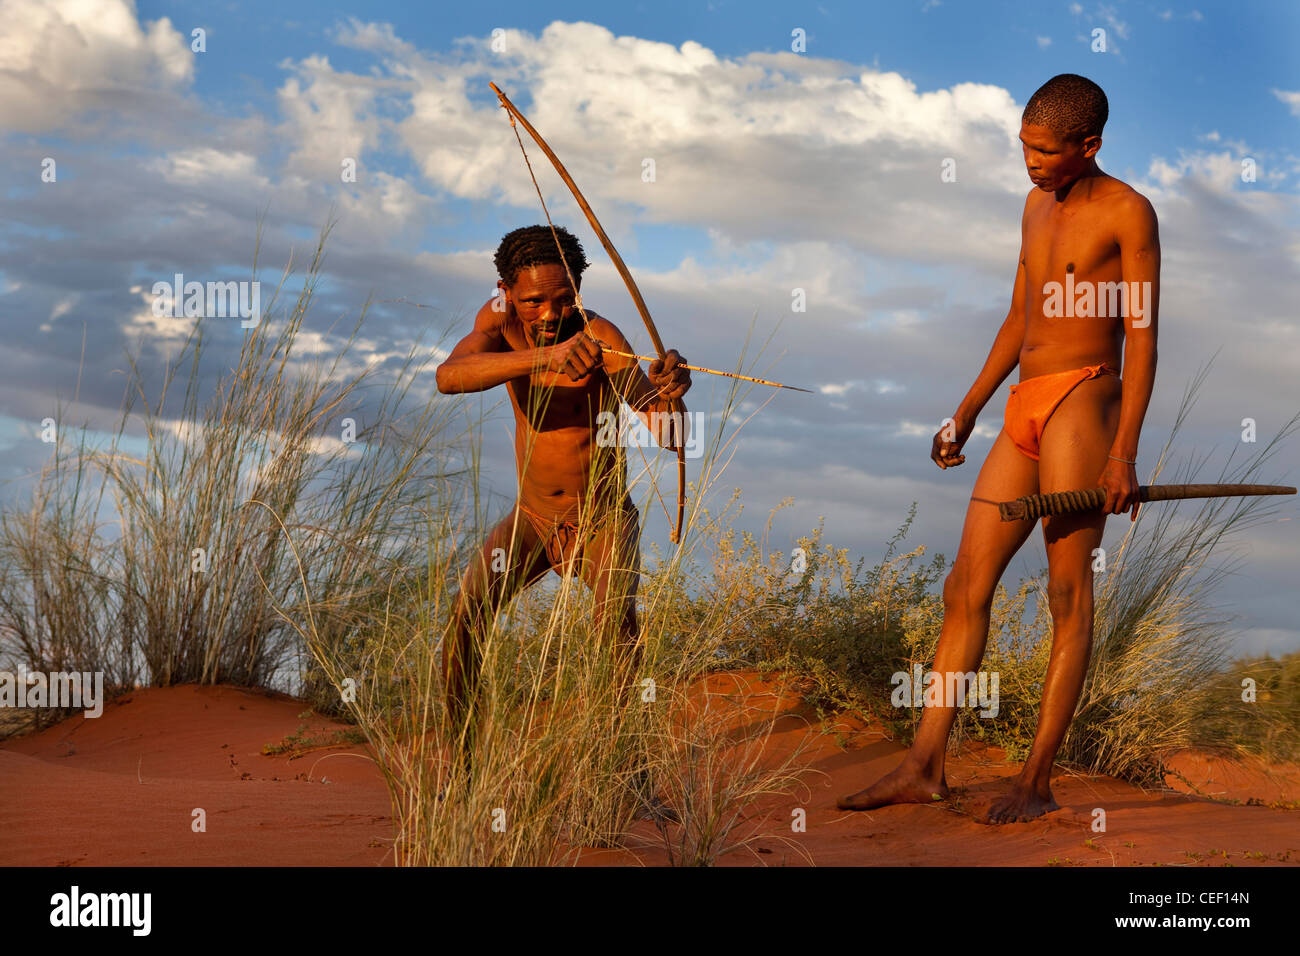 kalahari bushman pulling arrow during hunt Stock Photo